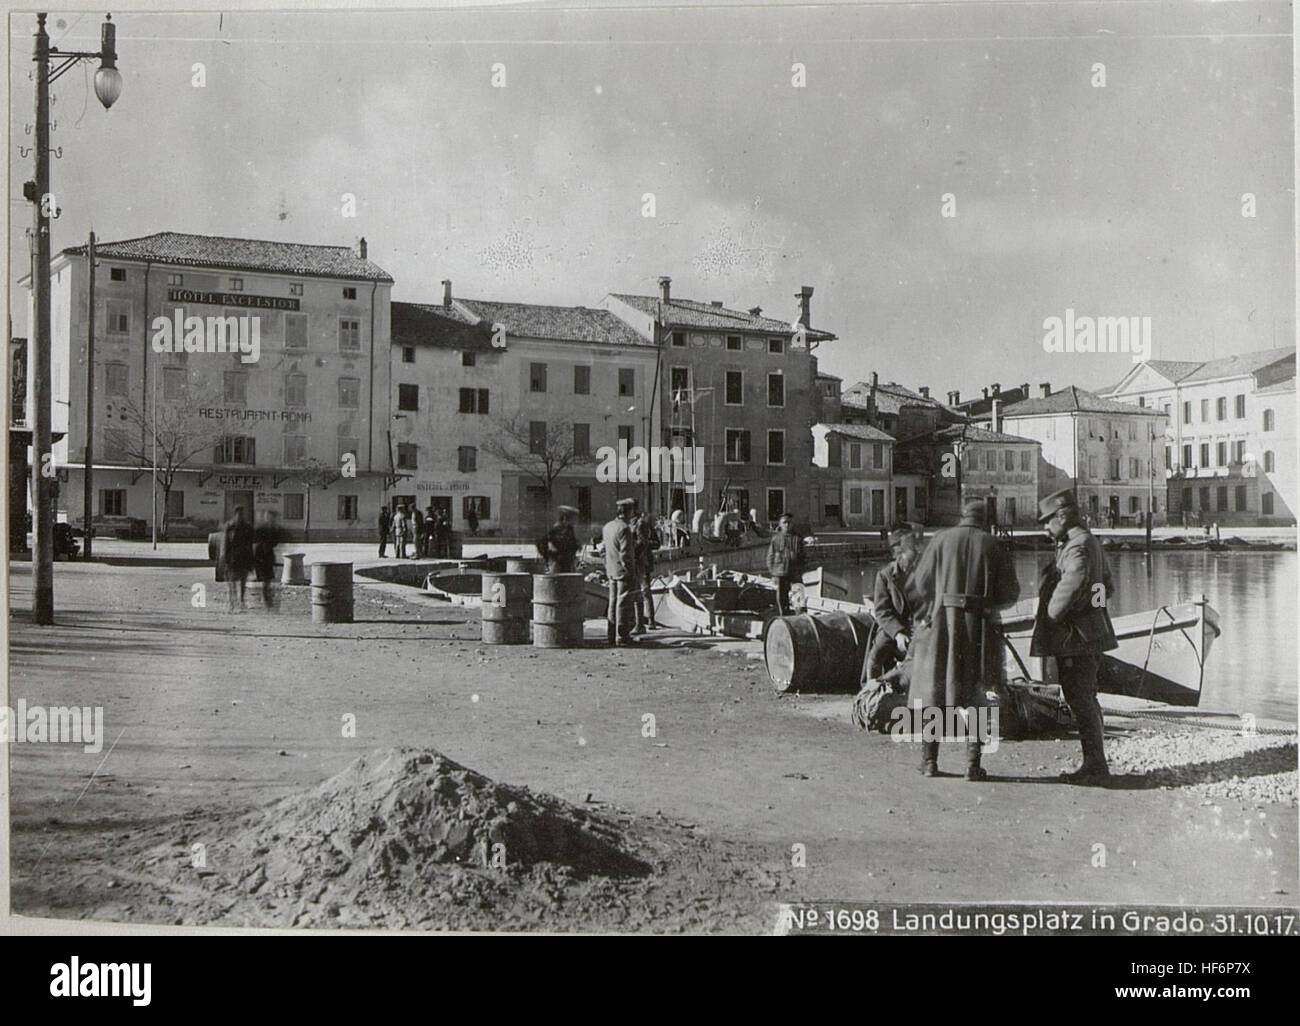 Landungsplatz in Grado 31.10.17. 15608313) Stock Photo